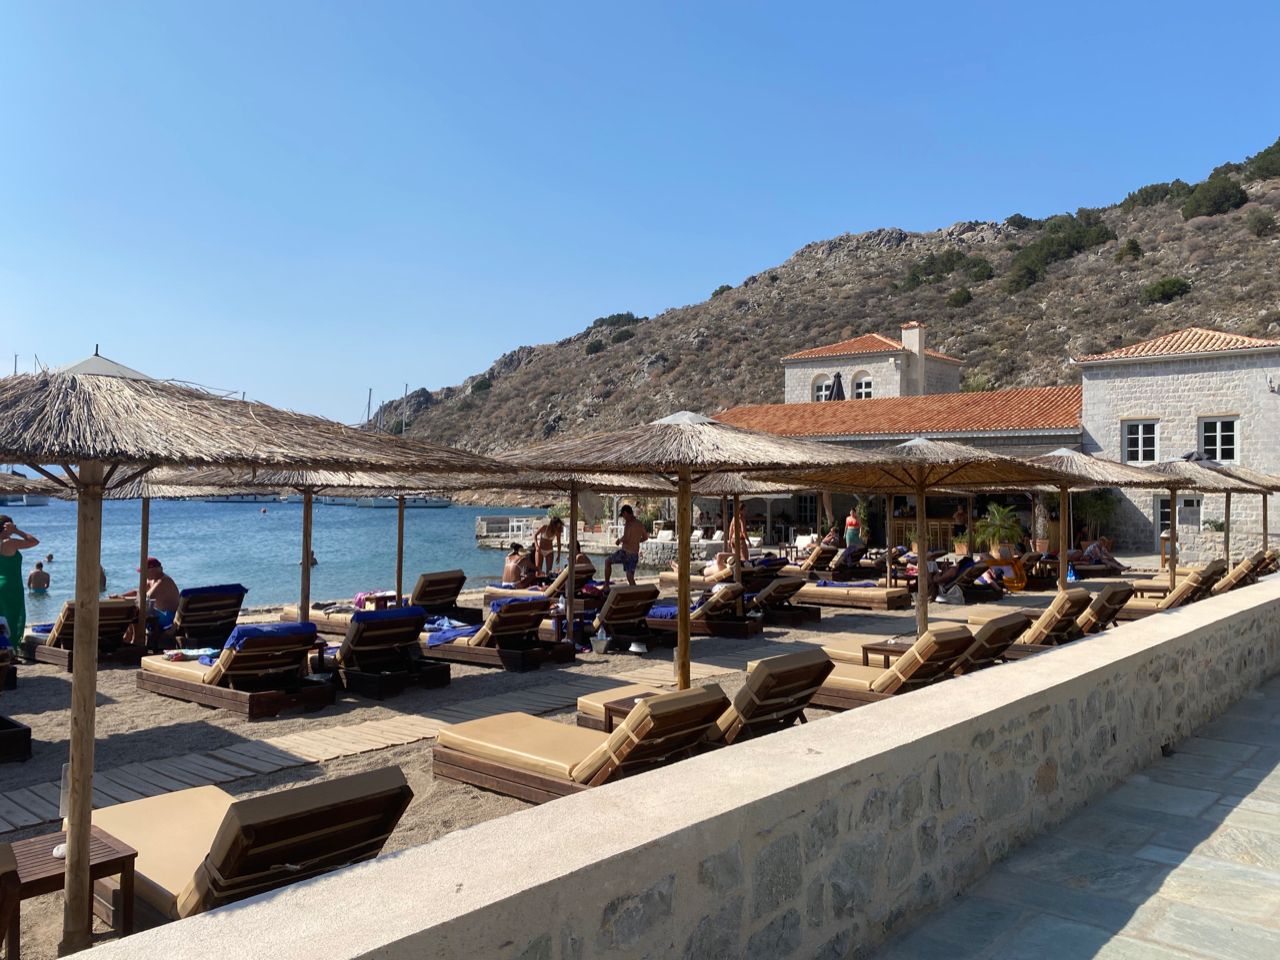 Mandraki Beach Resort in Mandraki Bay on Hydra Island Greece